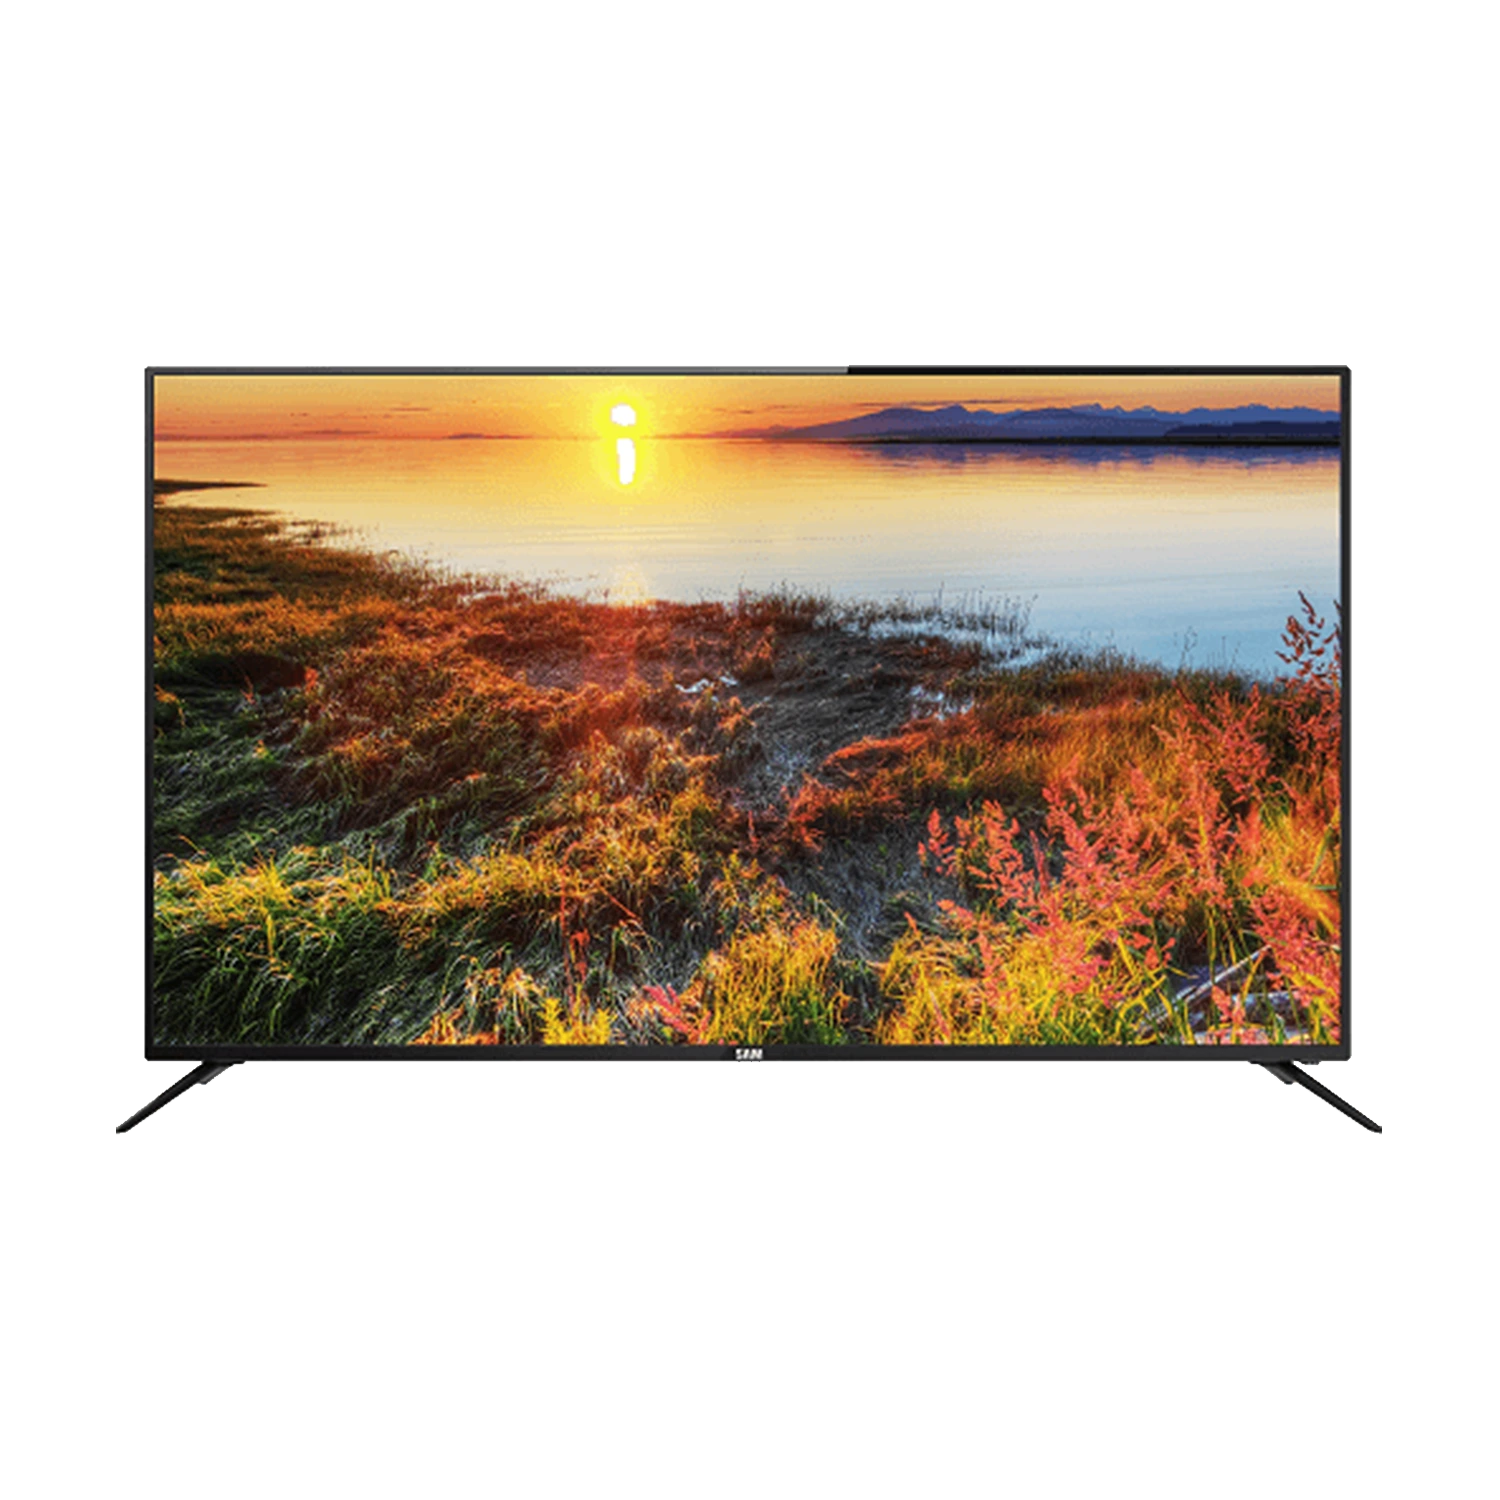 تلویزیون ال ای دی هوشمند سام الکترونیک مدل UA58TU6550TH سایز 58 اینچ